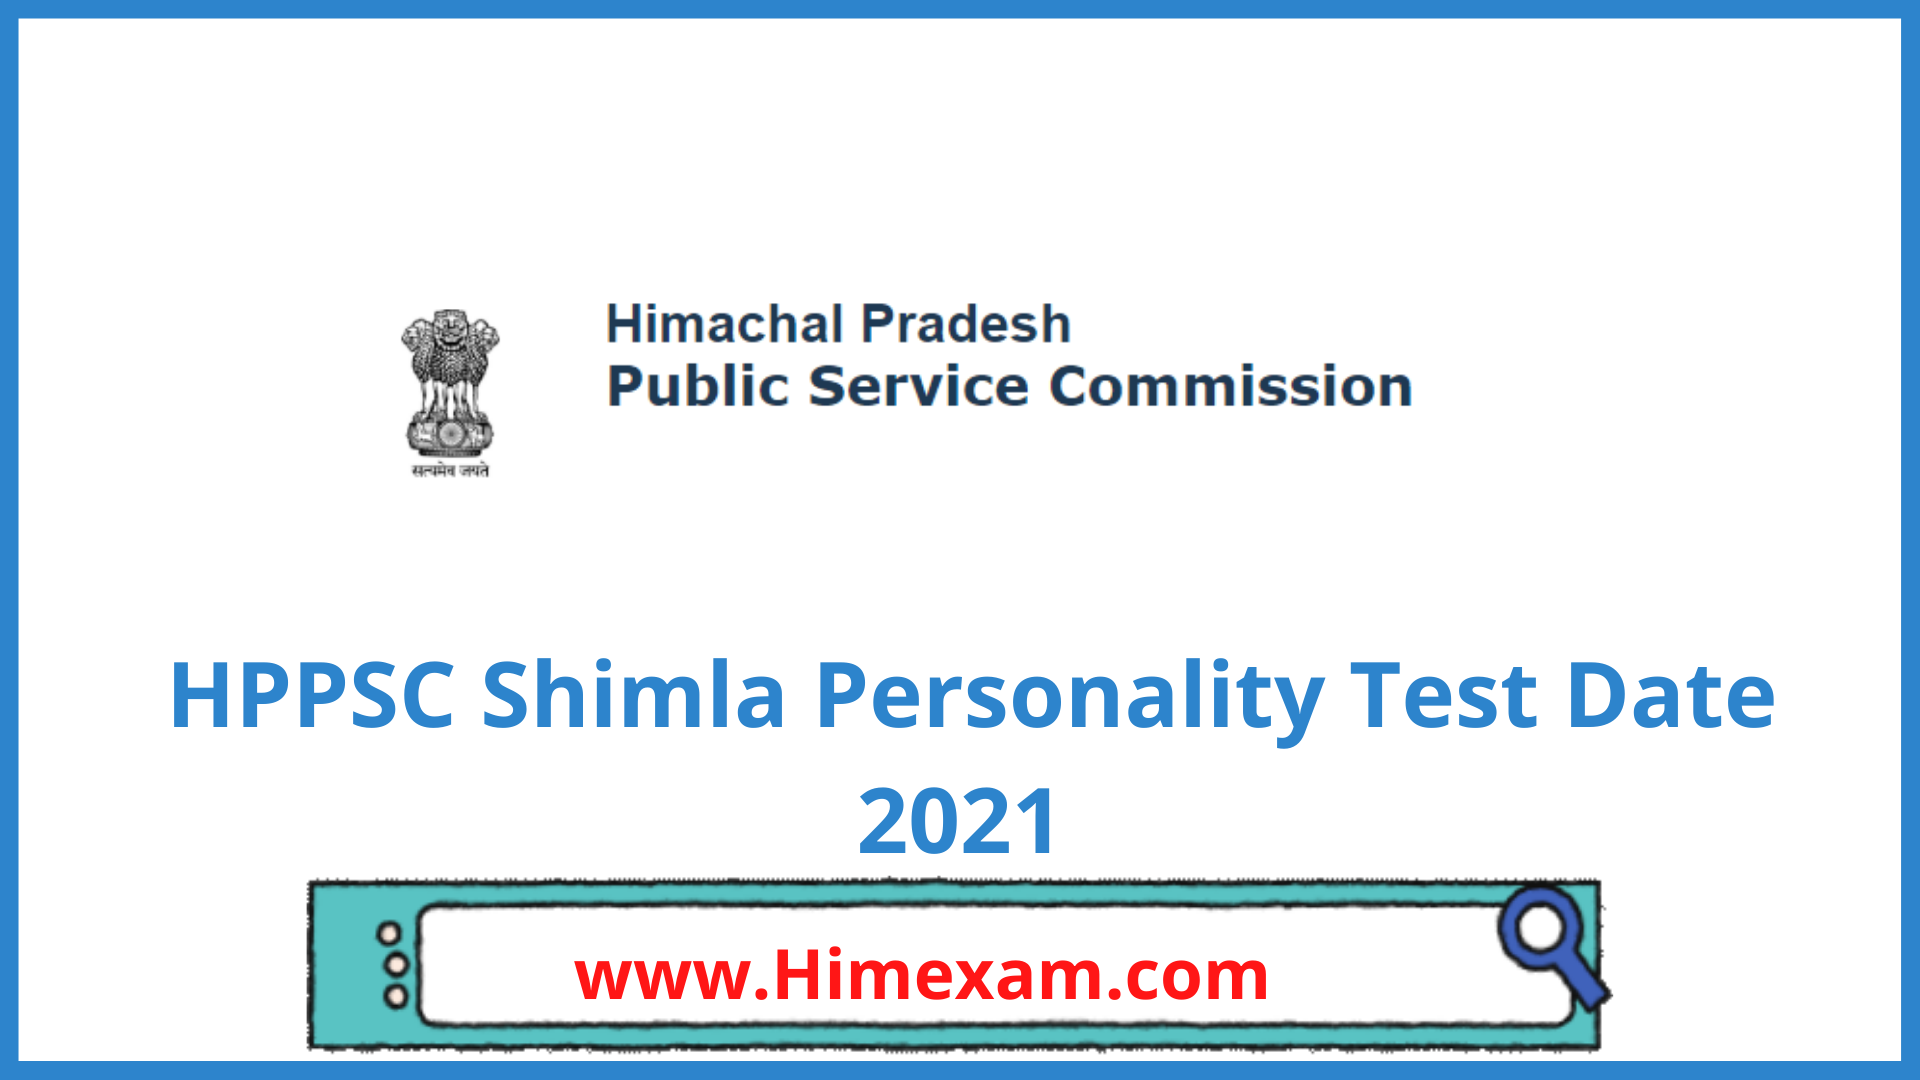 HPPSC Shimla Personality Test Date 2021